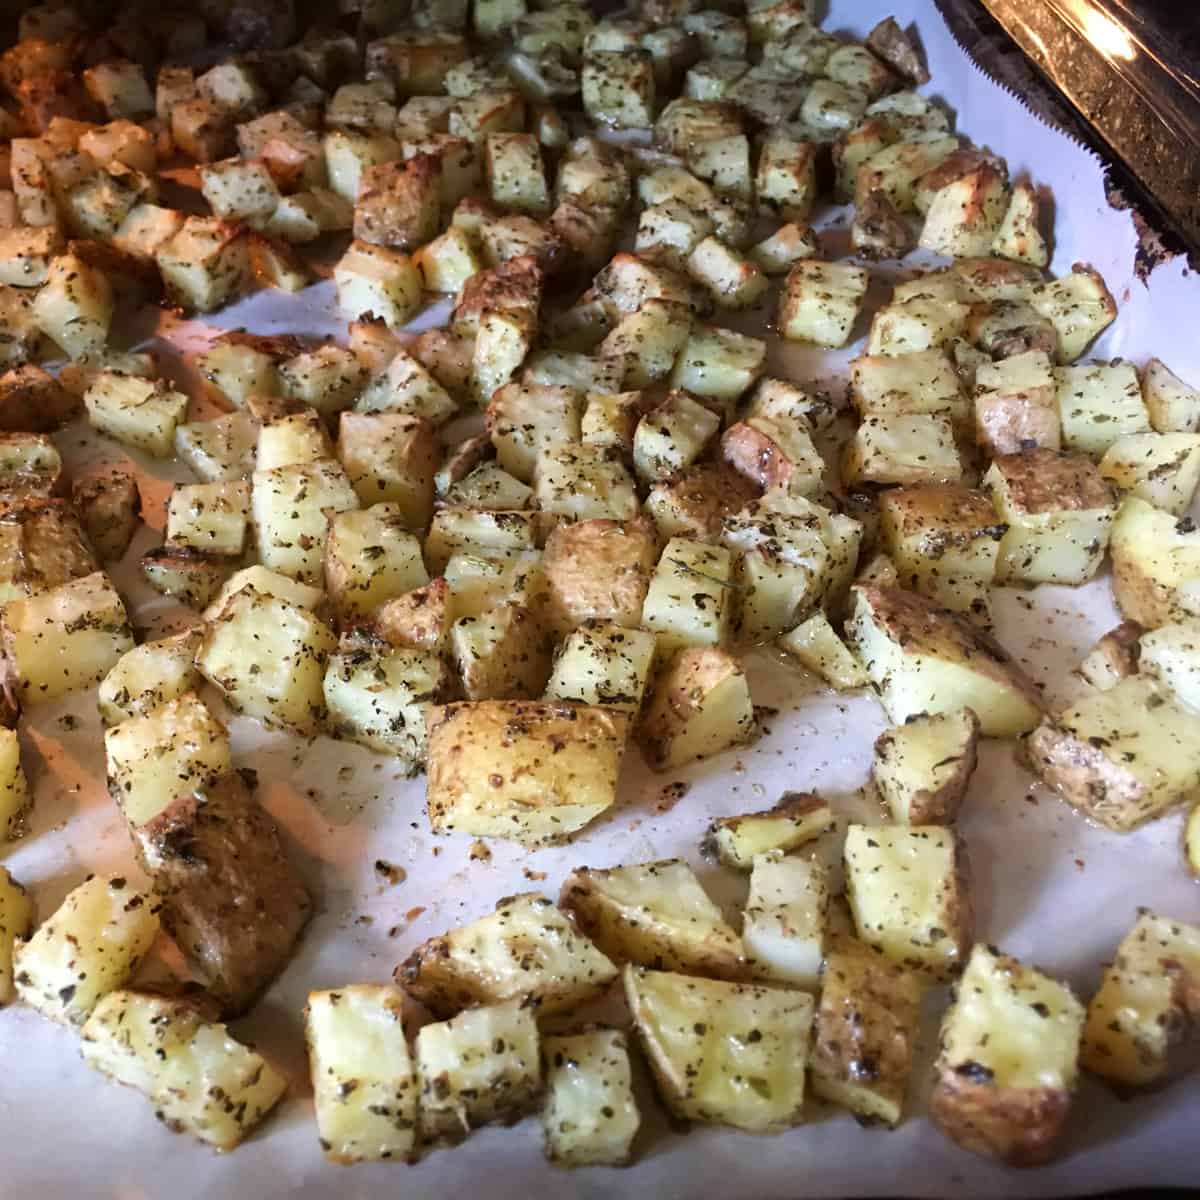 Potatoes with seasoning on a baking sheet.